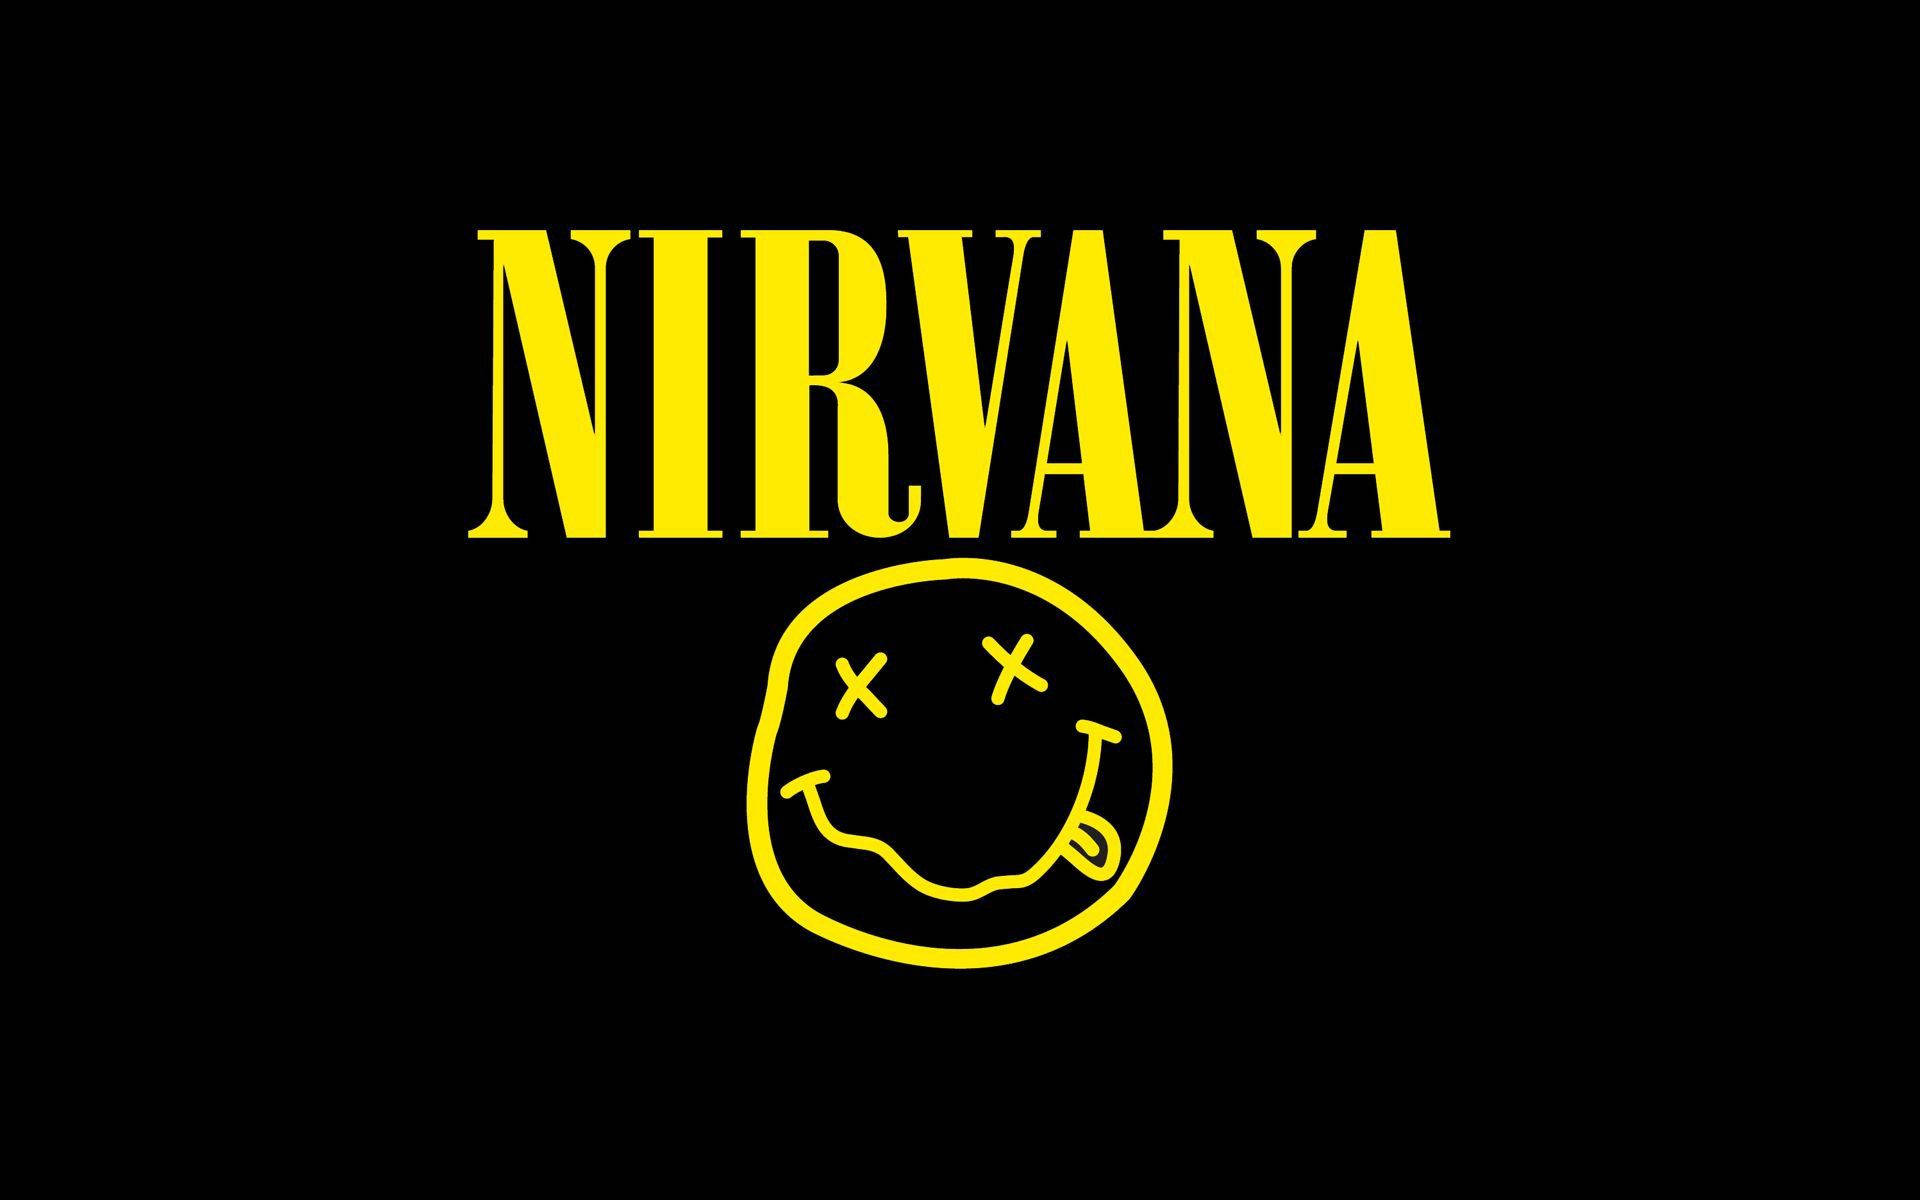 Nirvanasöta Smileyhuvud-logo. Wallpaper